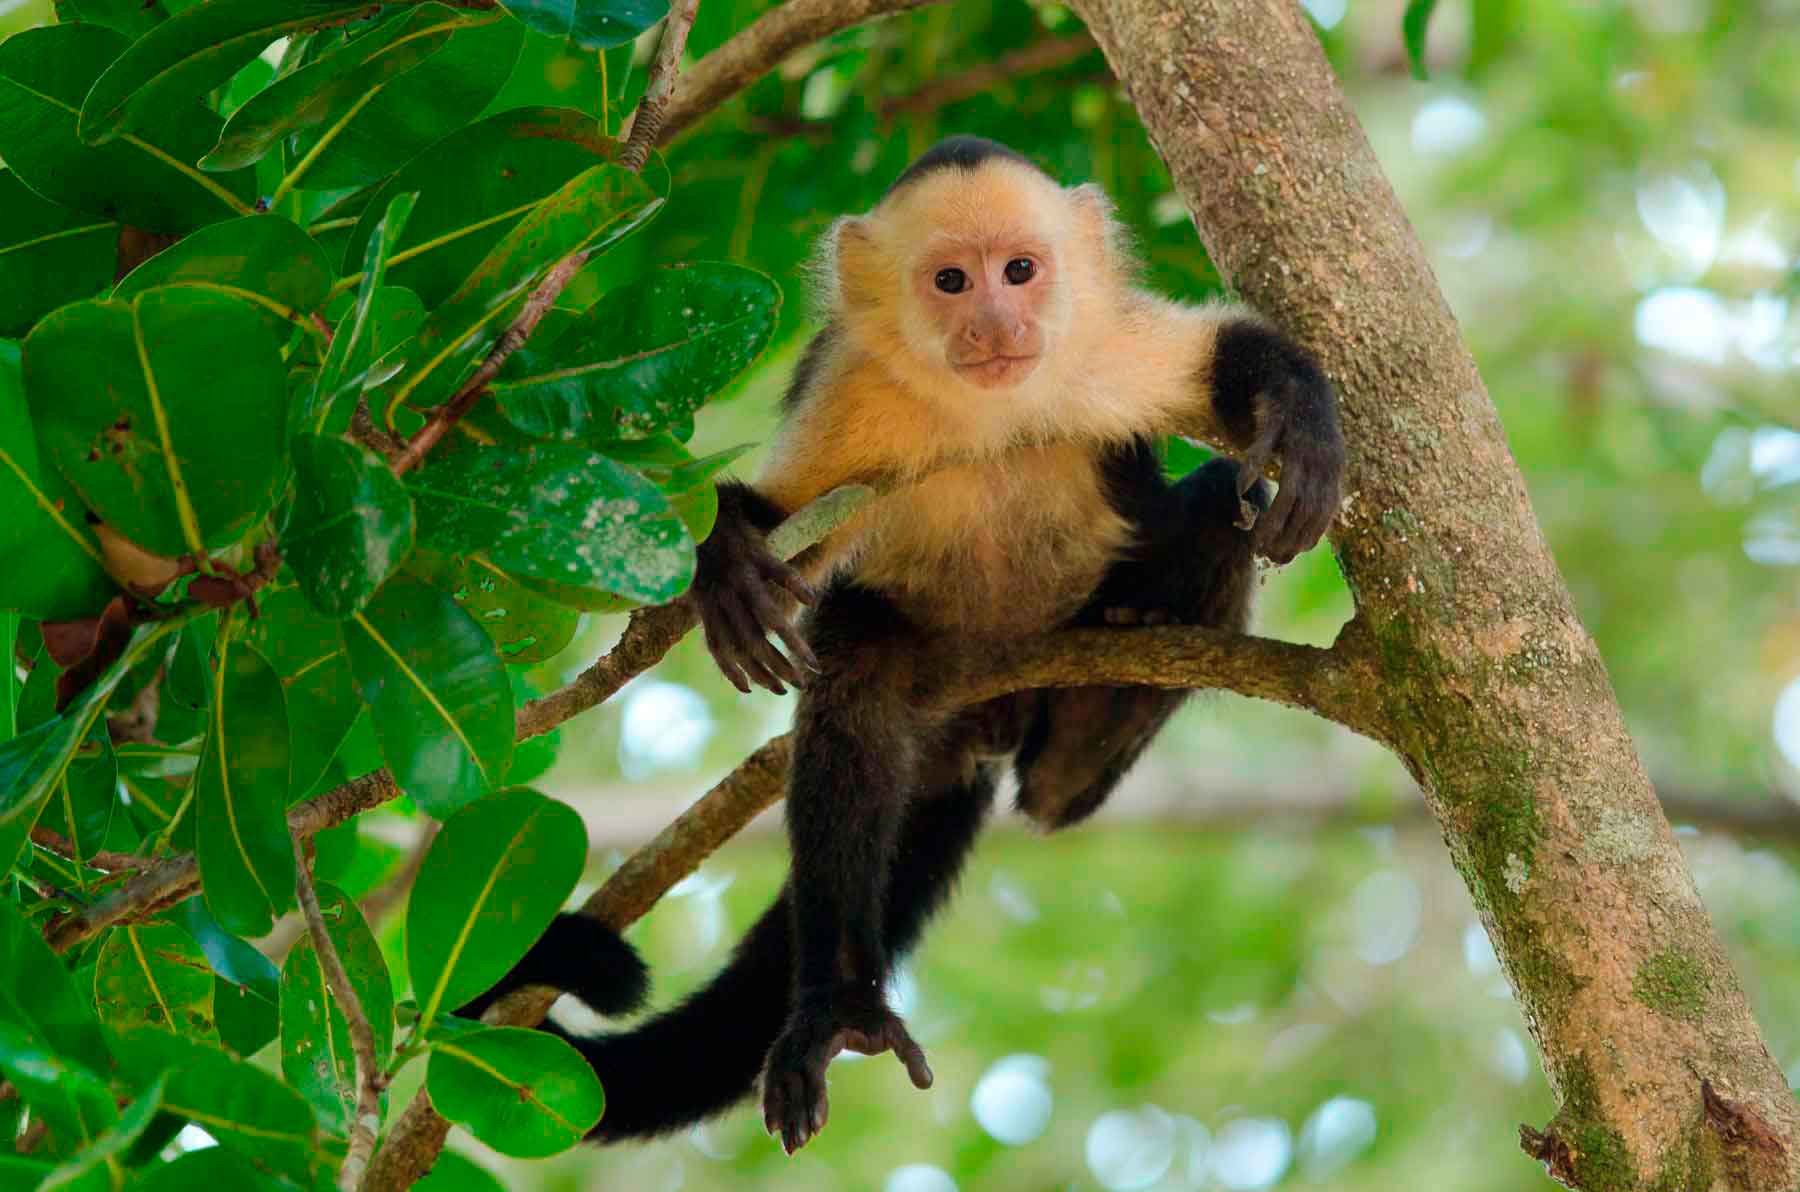 Capuchin monkeys wash their hands and feet in urine